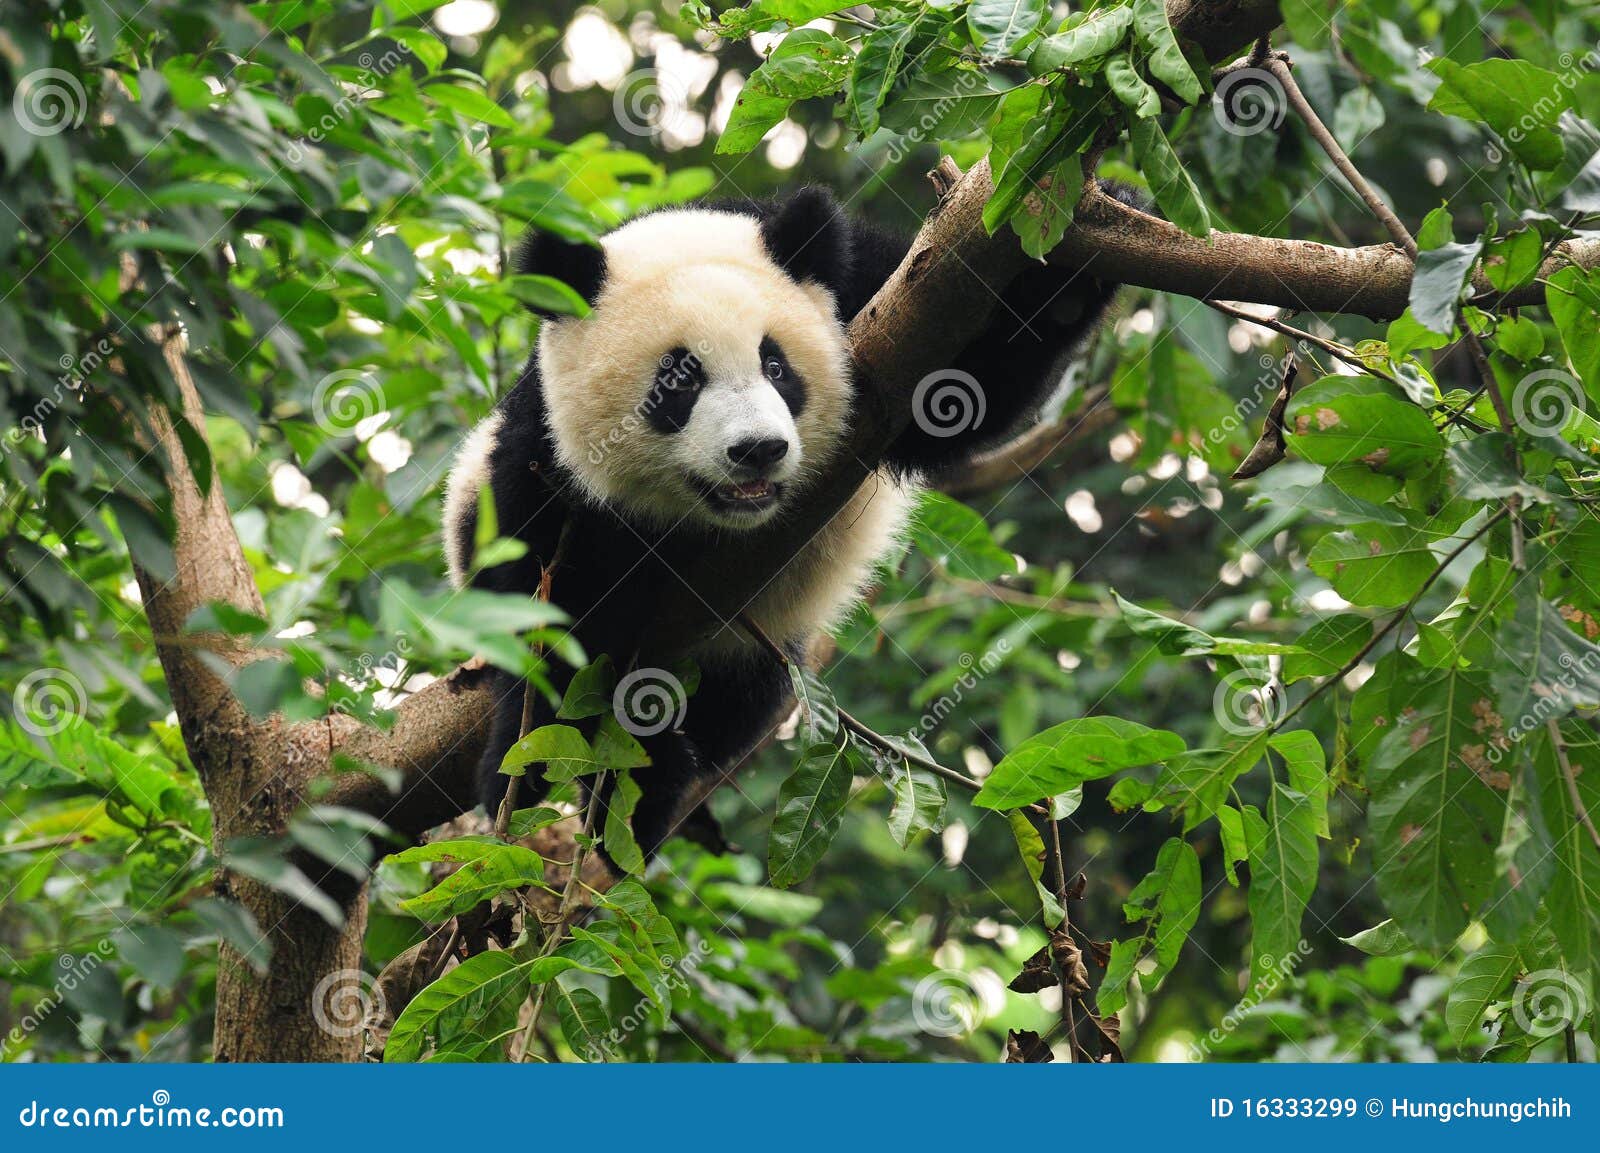 giant panda bear in tree